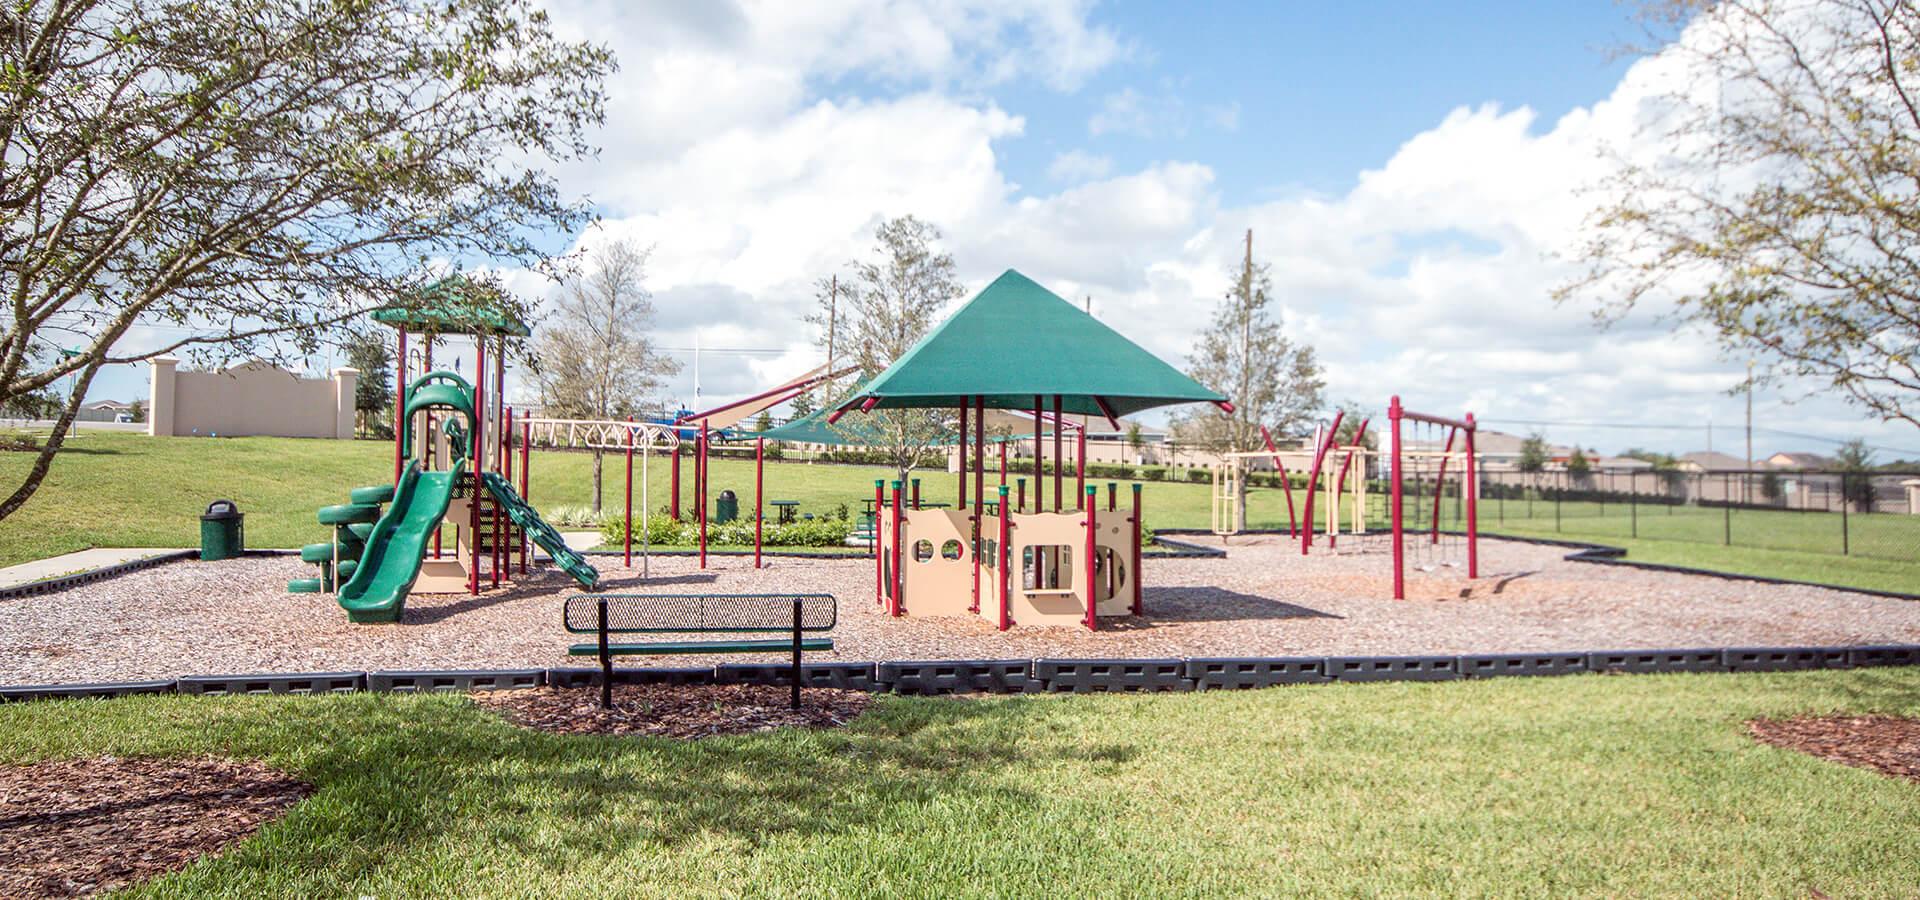 Park and Playground Amenities